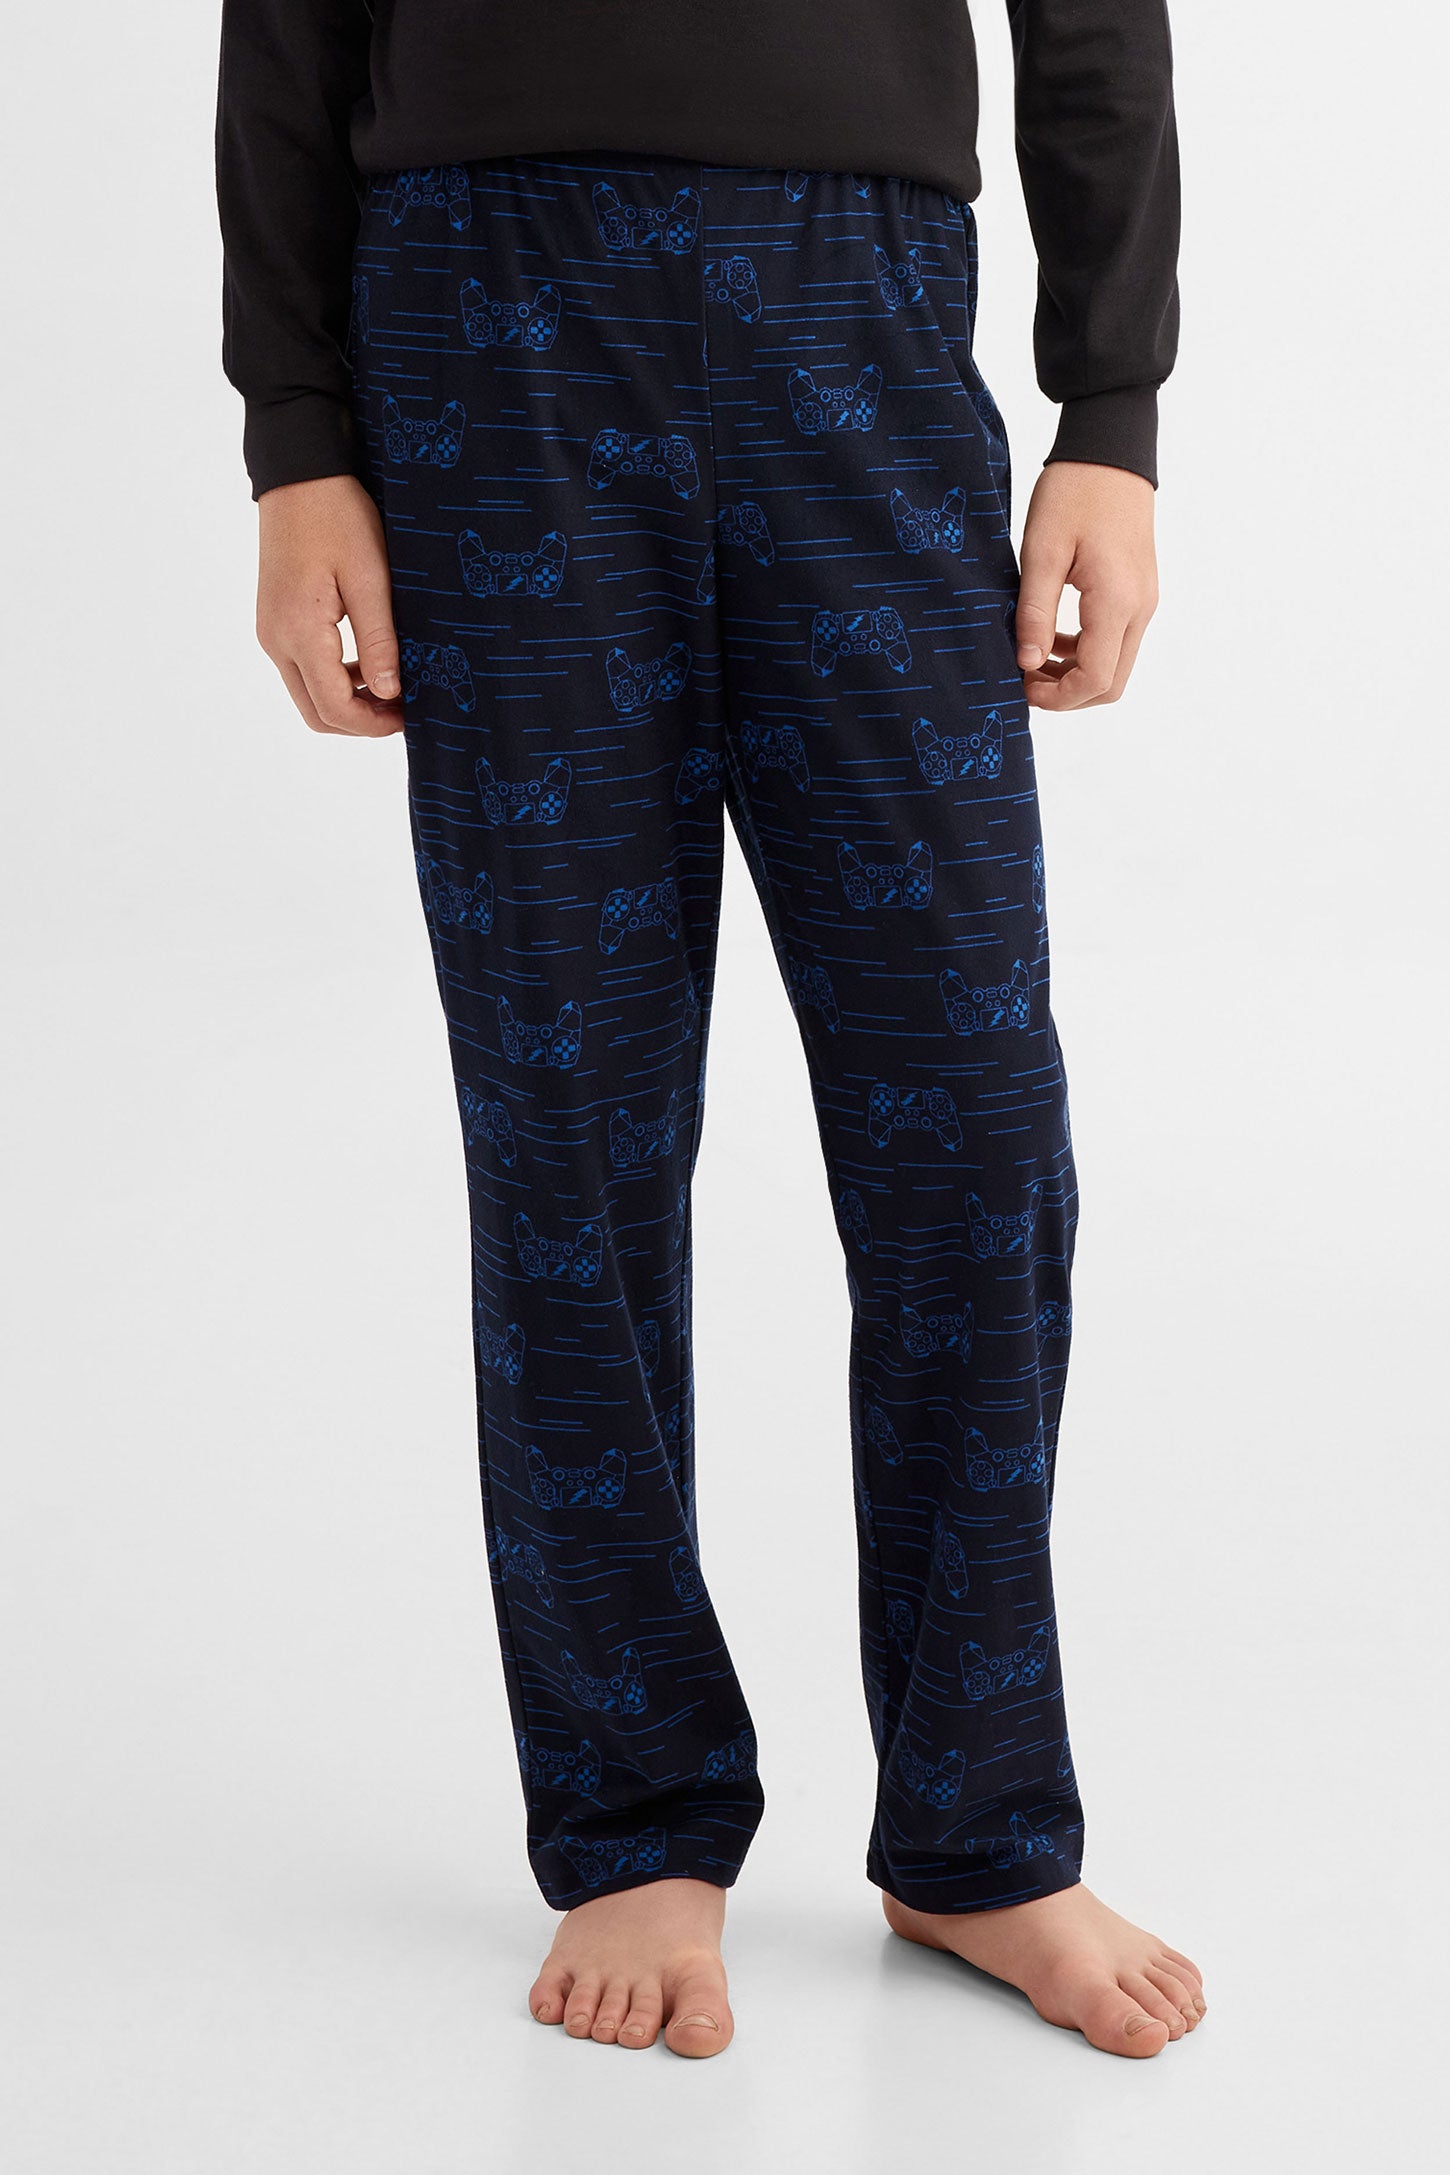 Pantalon pyjama - Ado garçon && COMBO NOIR